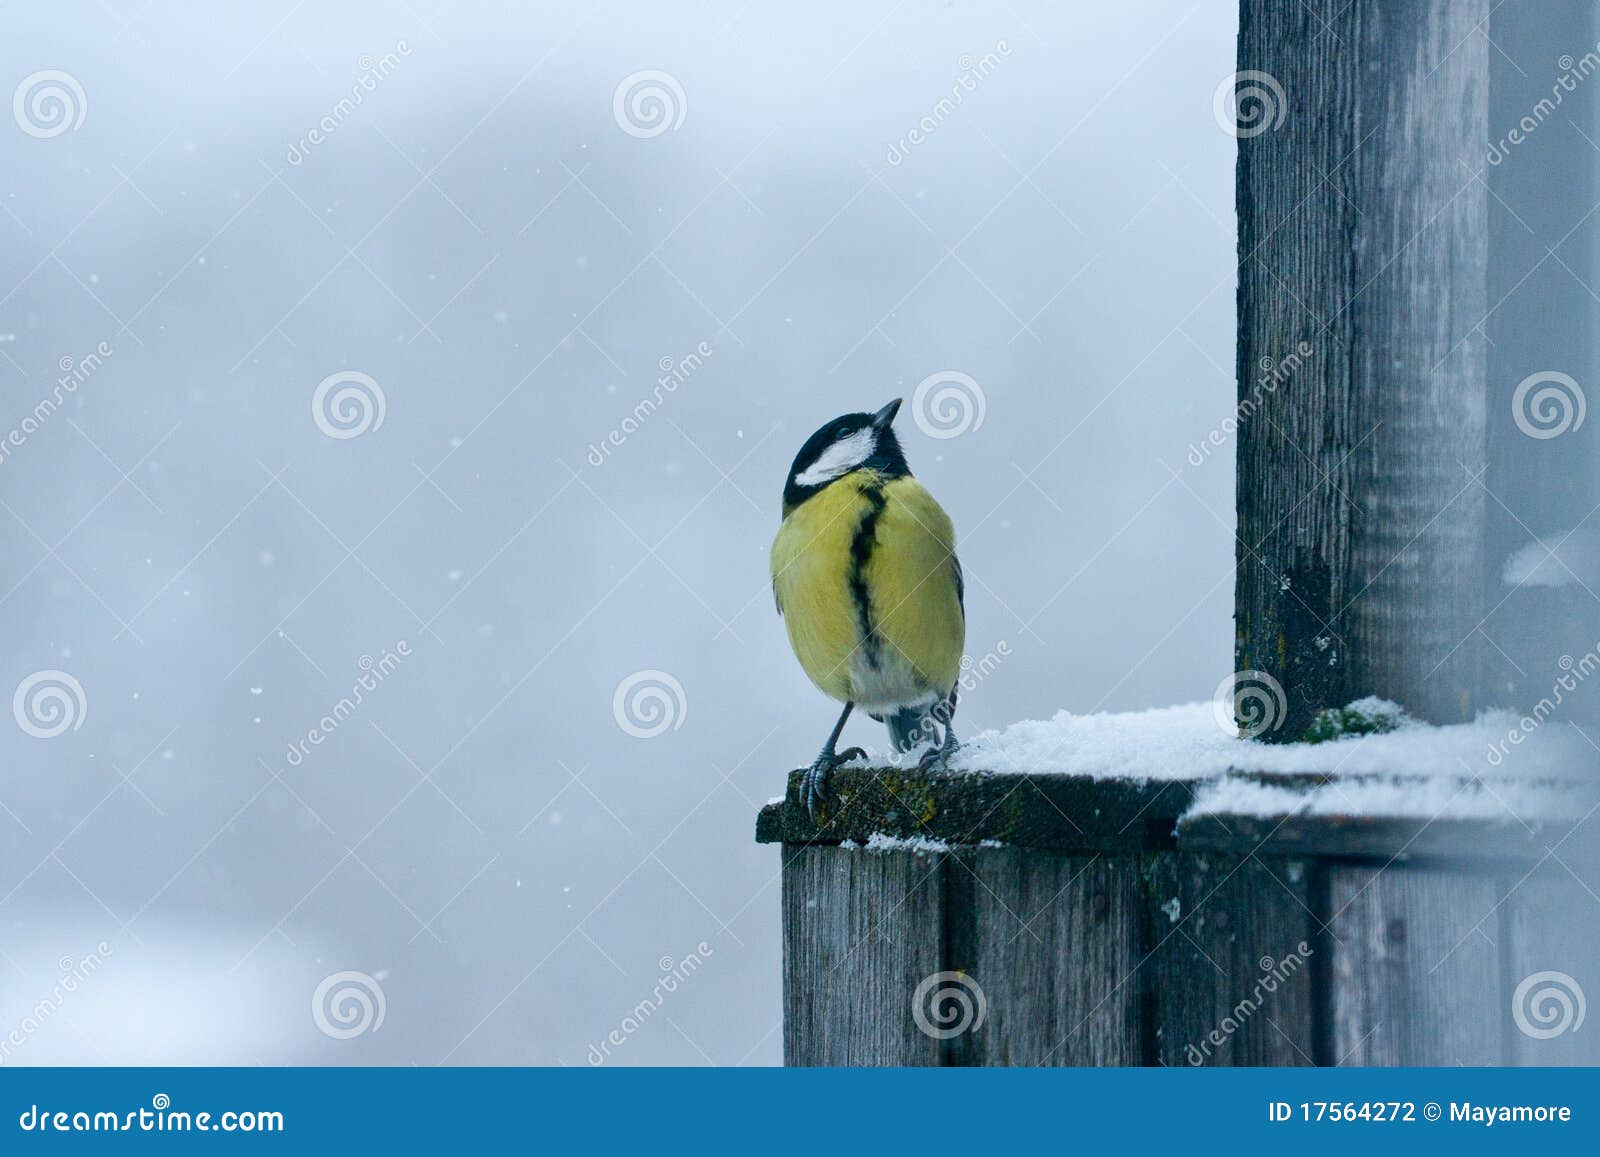 2,227 Winter Tomtit Bird Stock Photos - Free & Royalty-Free Stock